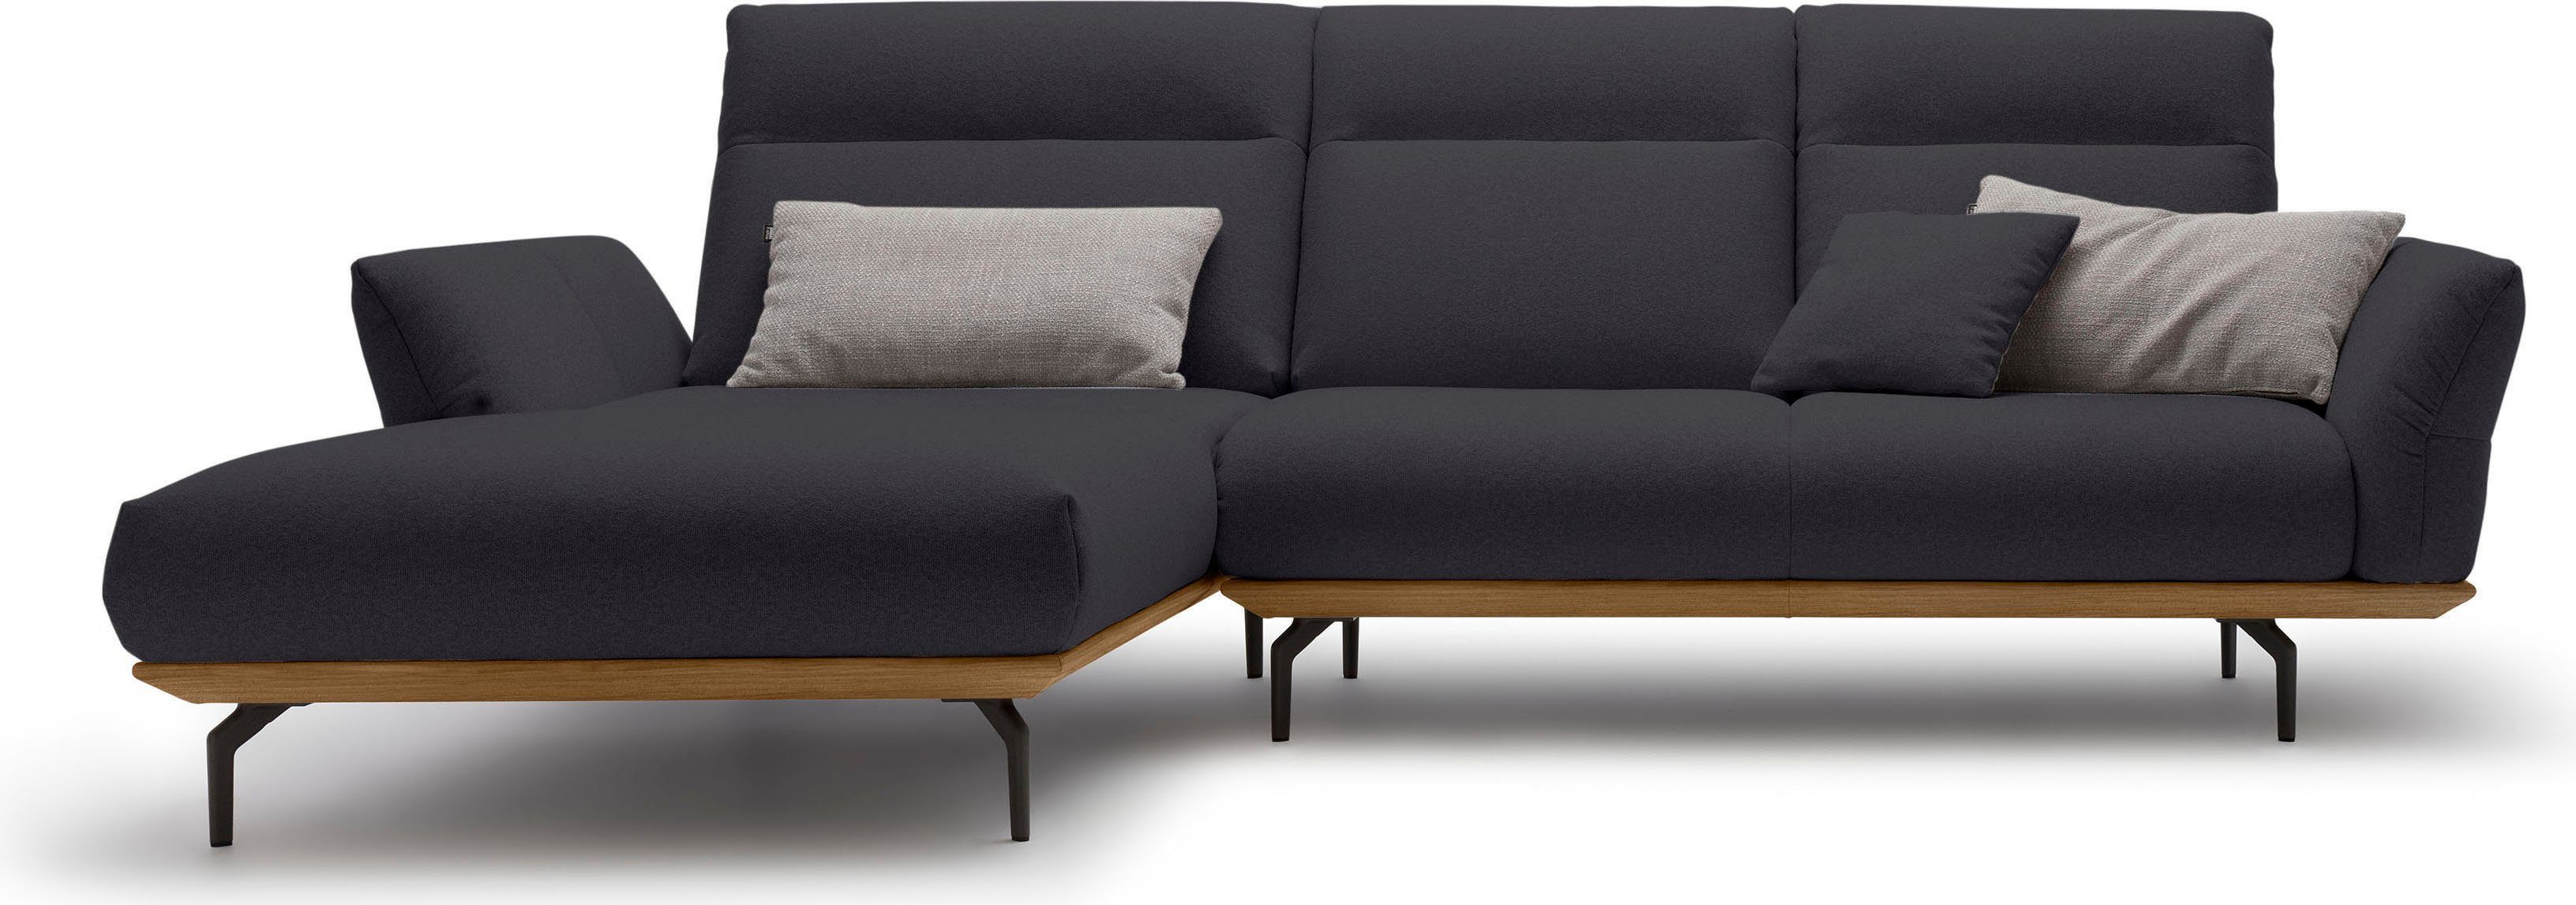 hülsta sofa Ecksofa hs.460, Sockel in Nussbaum, Winkelfüße in Umbragrau, Breite 298 cm